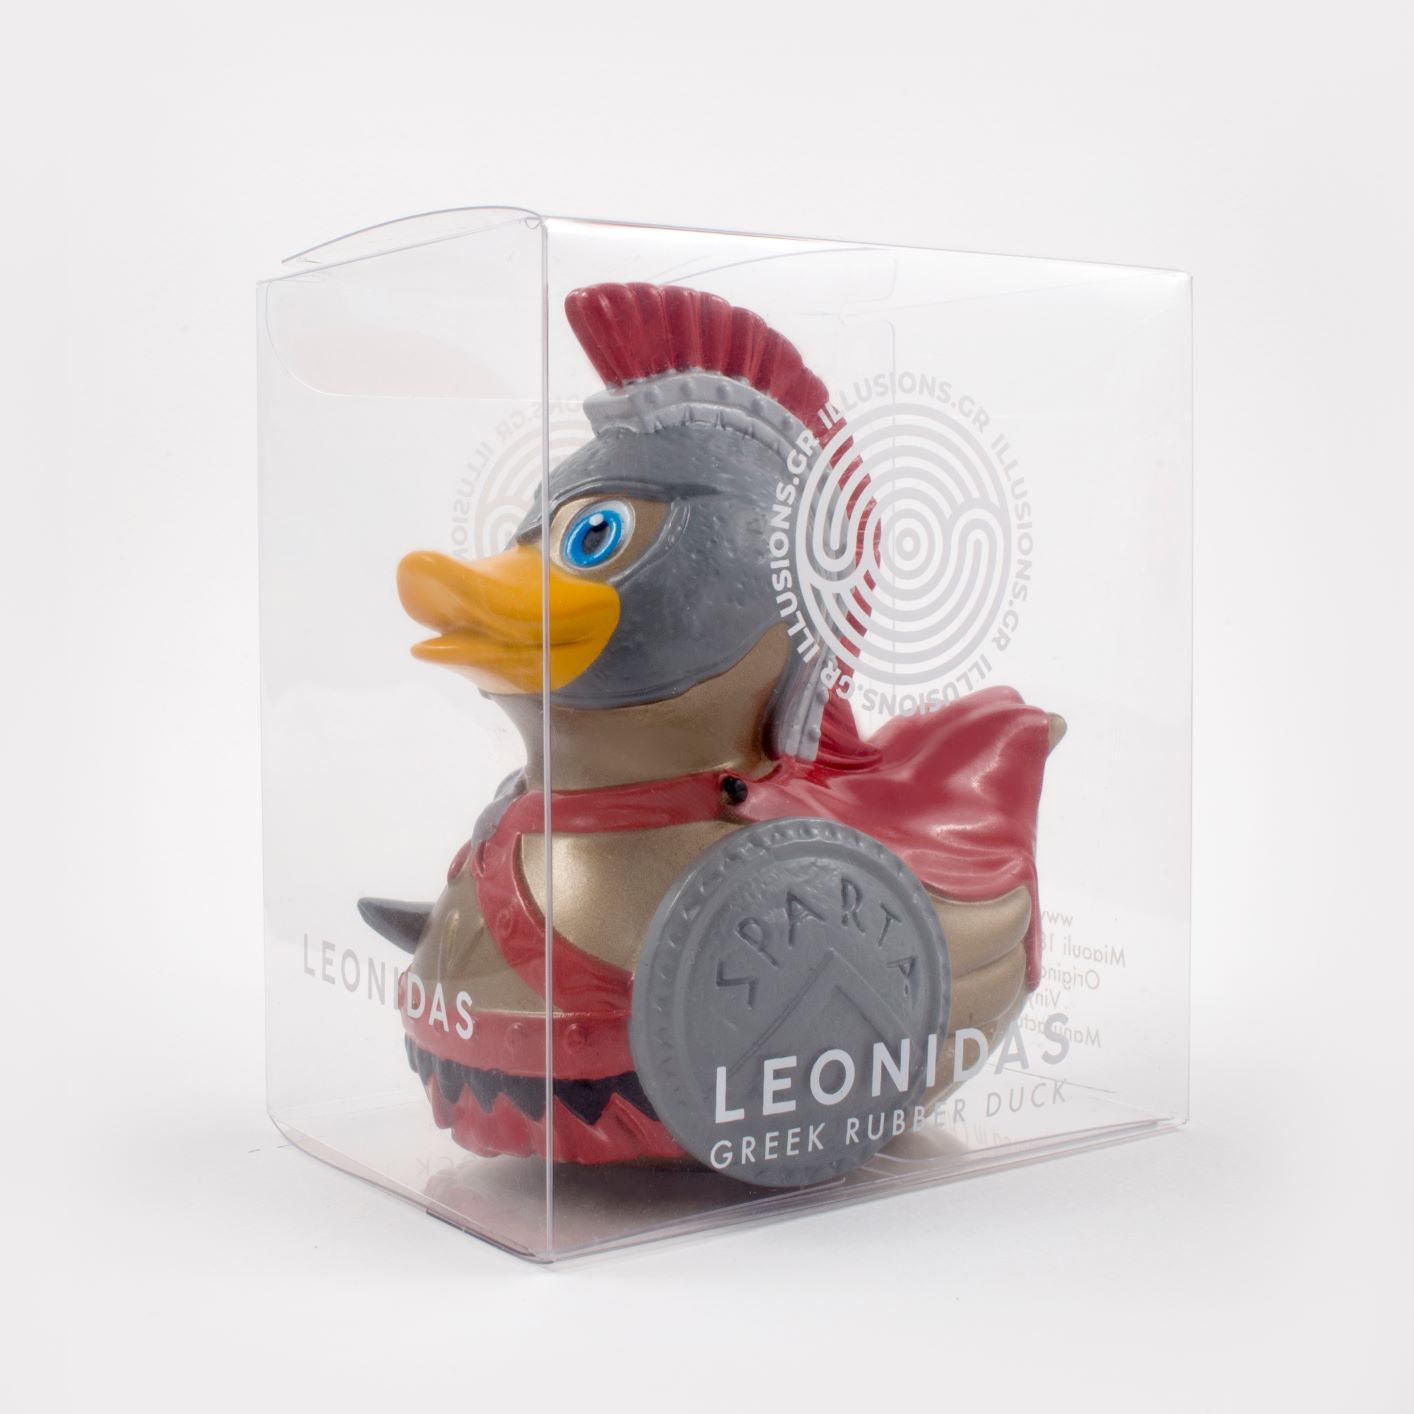 Duck Leonidas